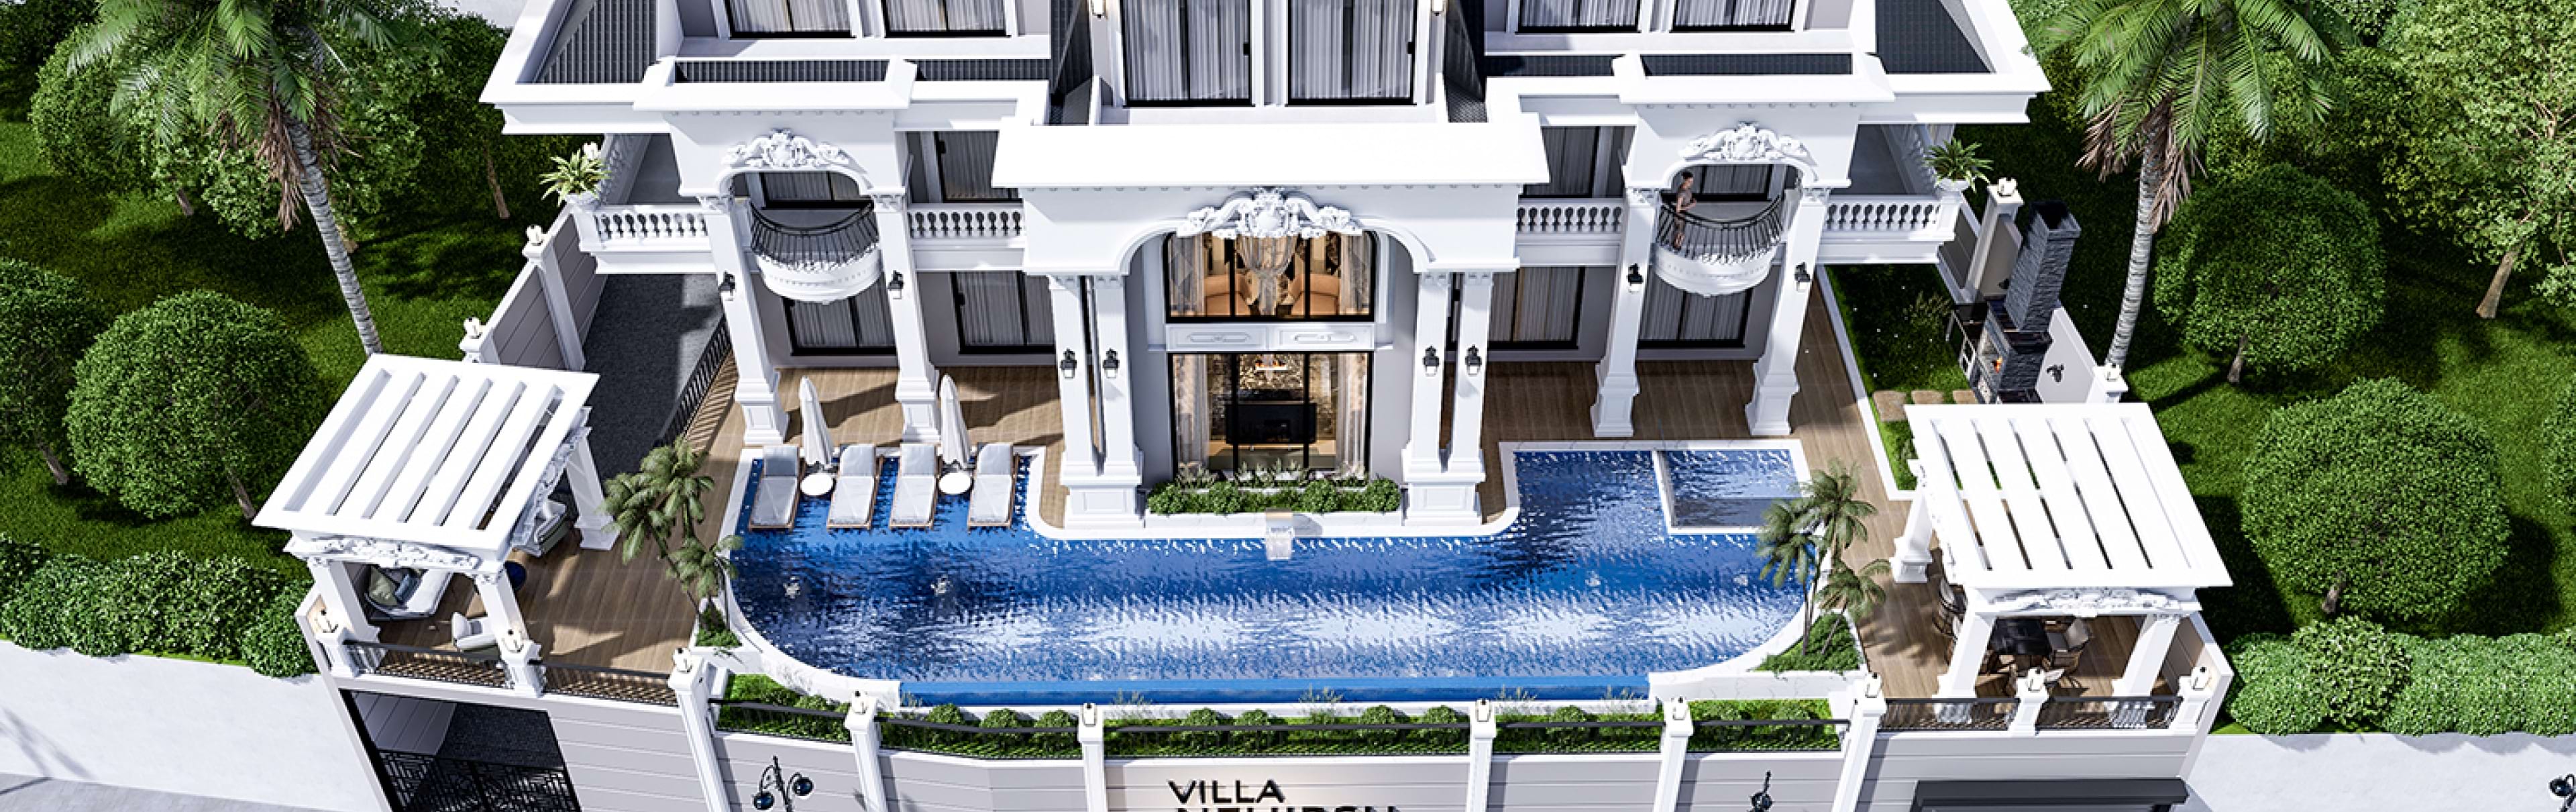 Brand new luxury villa